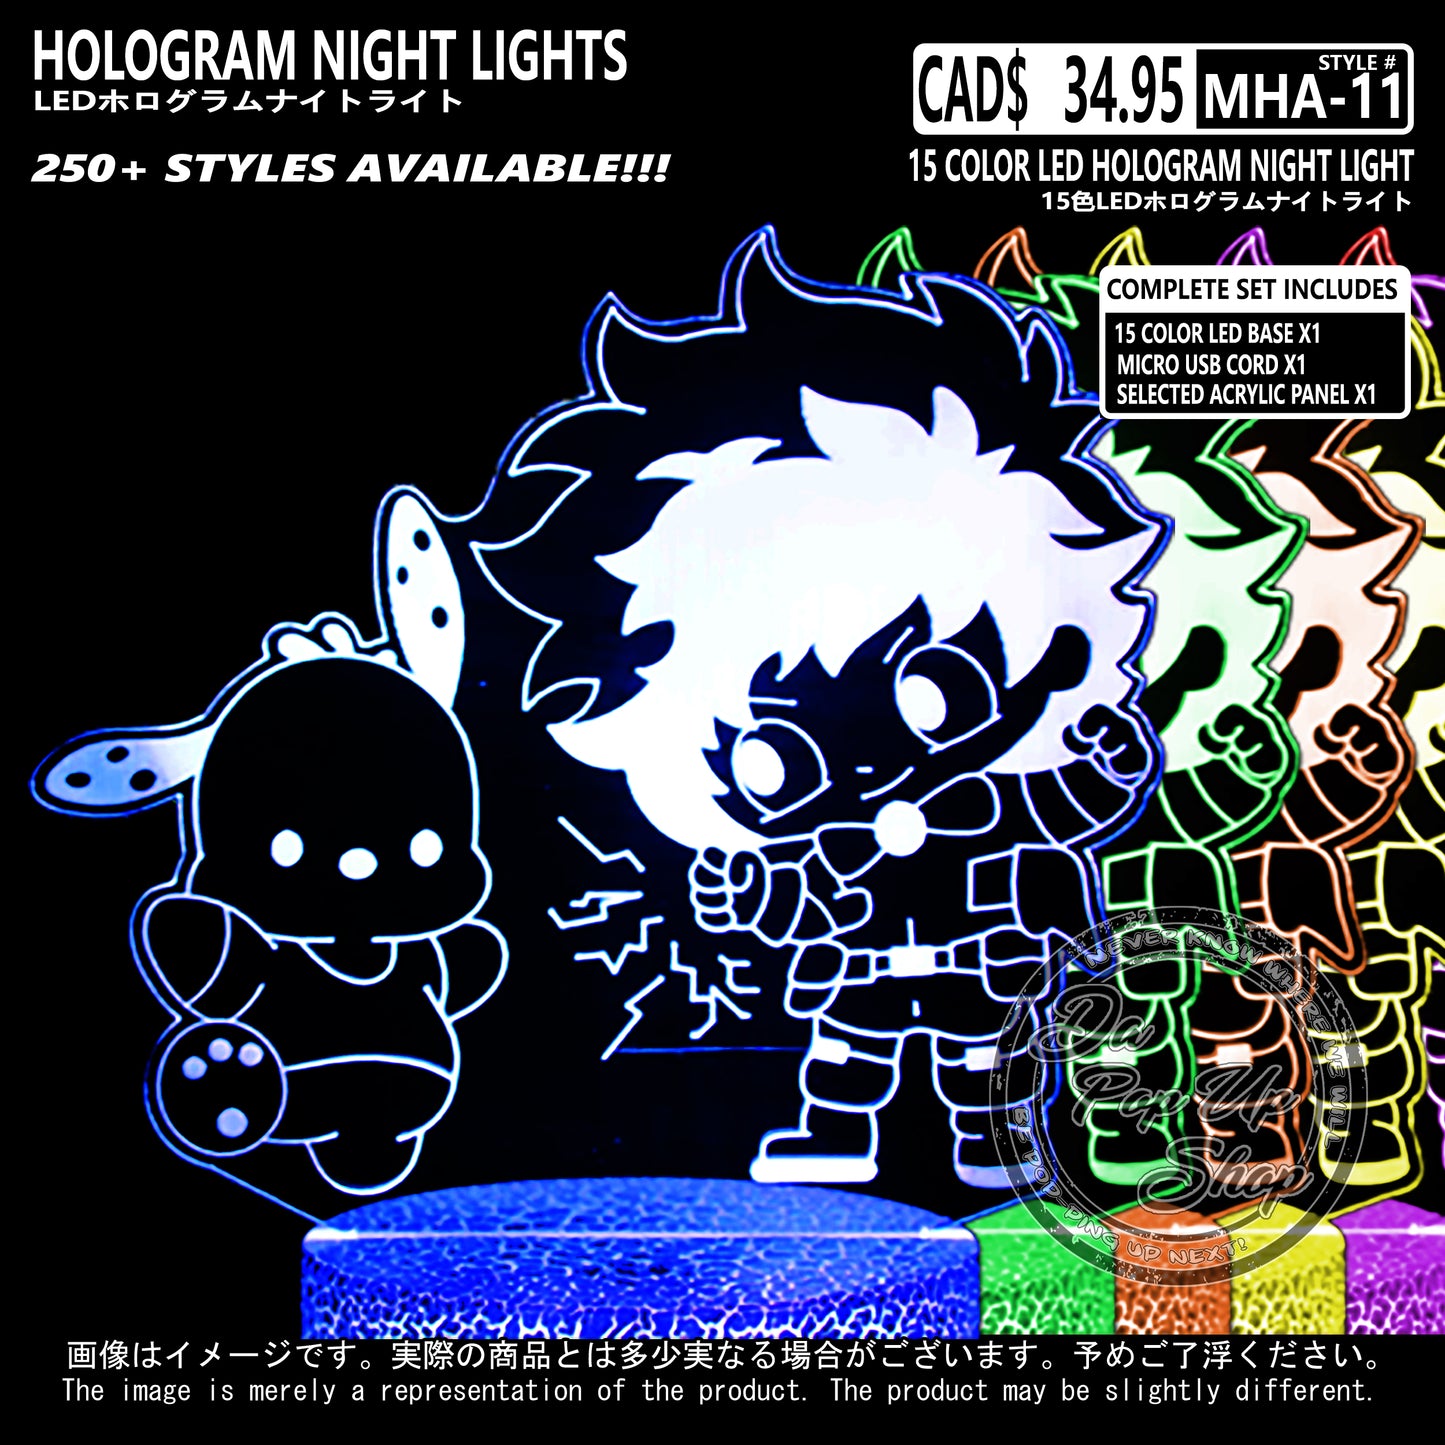 (MHA-11) My Hero Academia Hologram LED Night Light